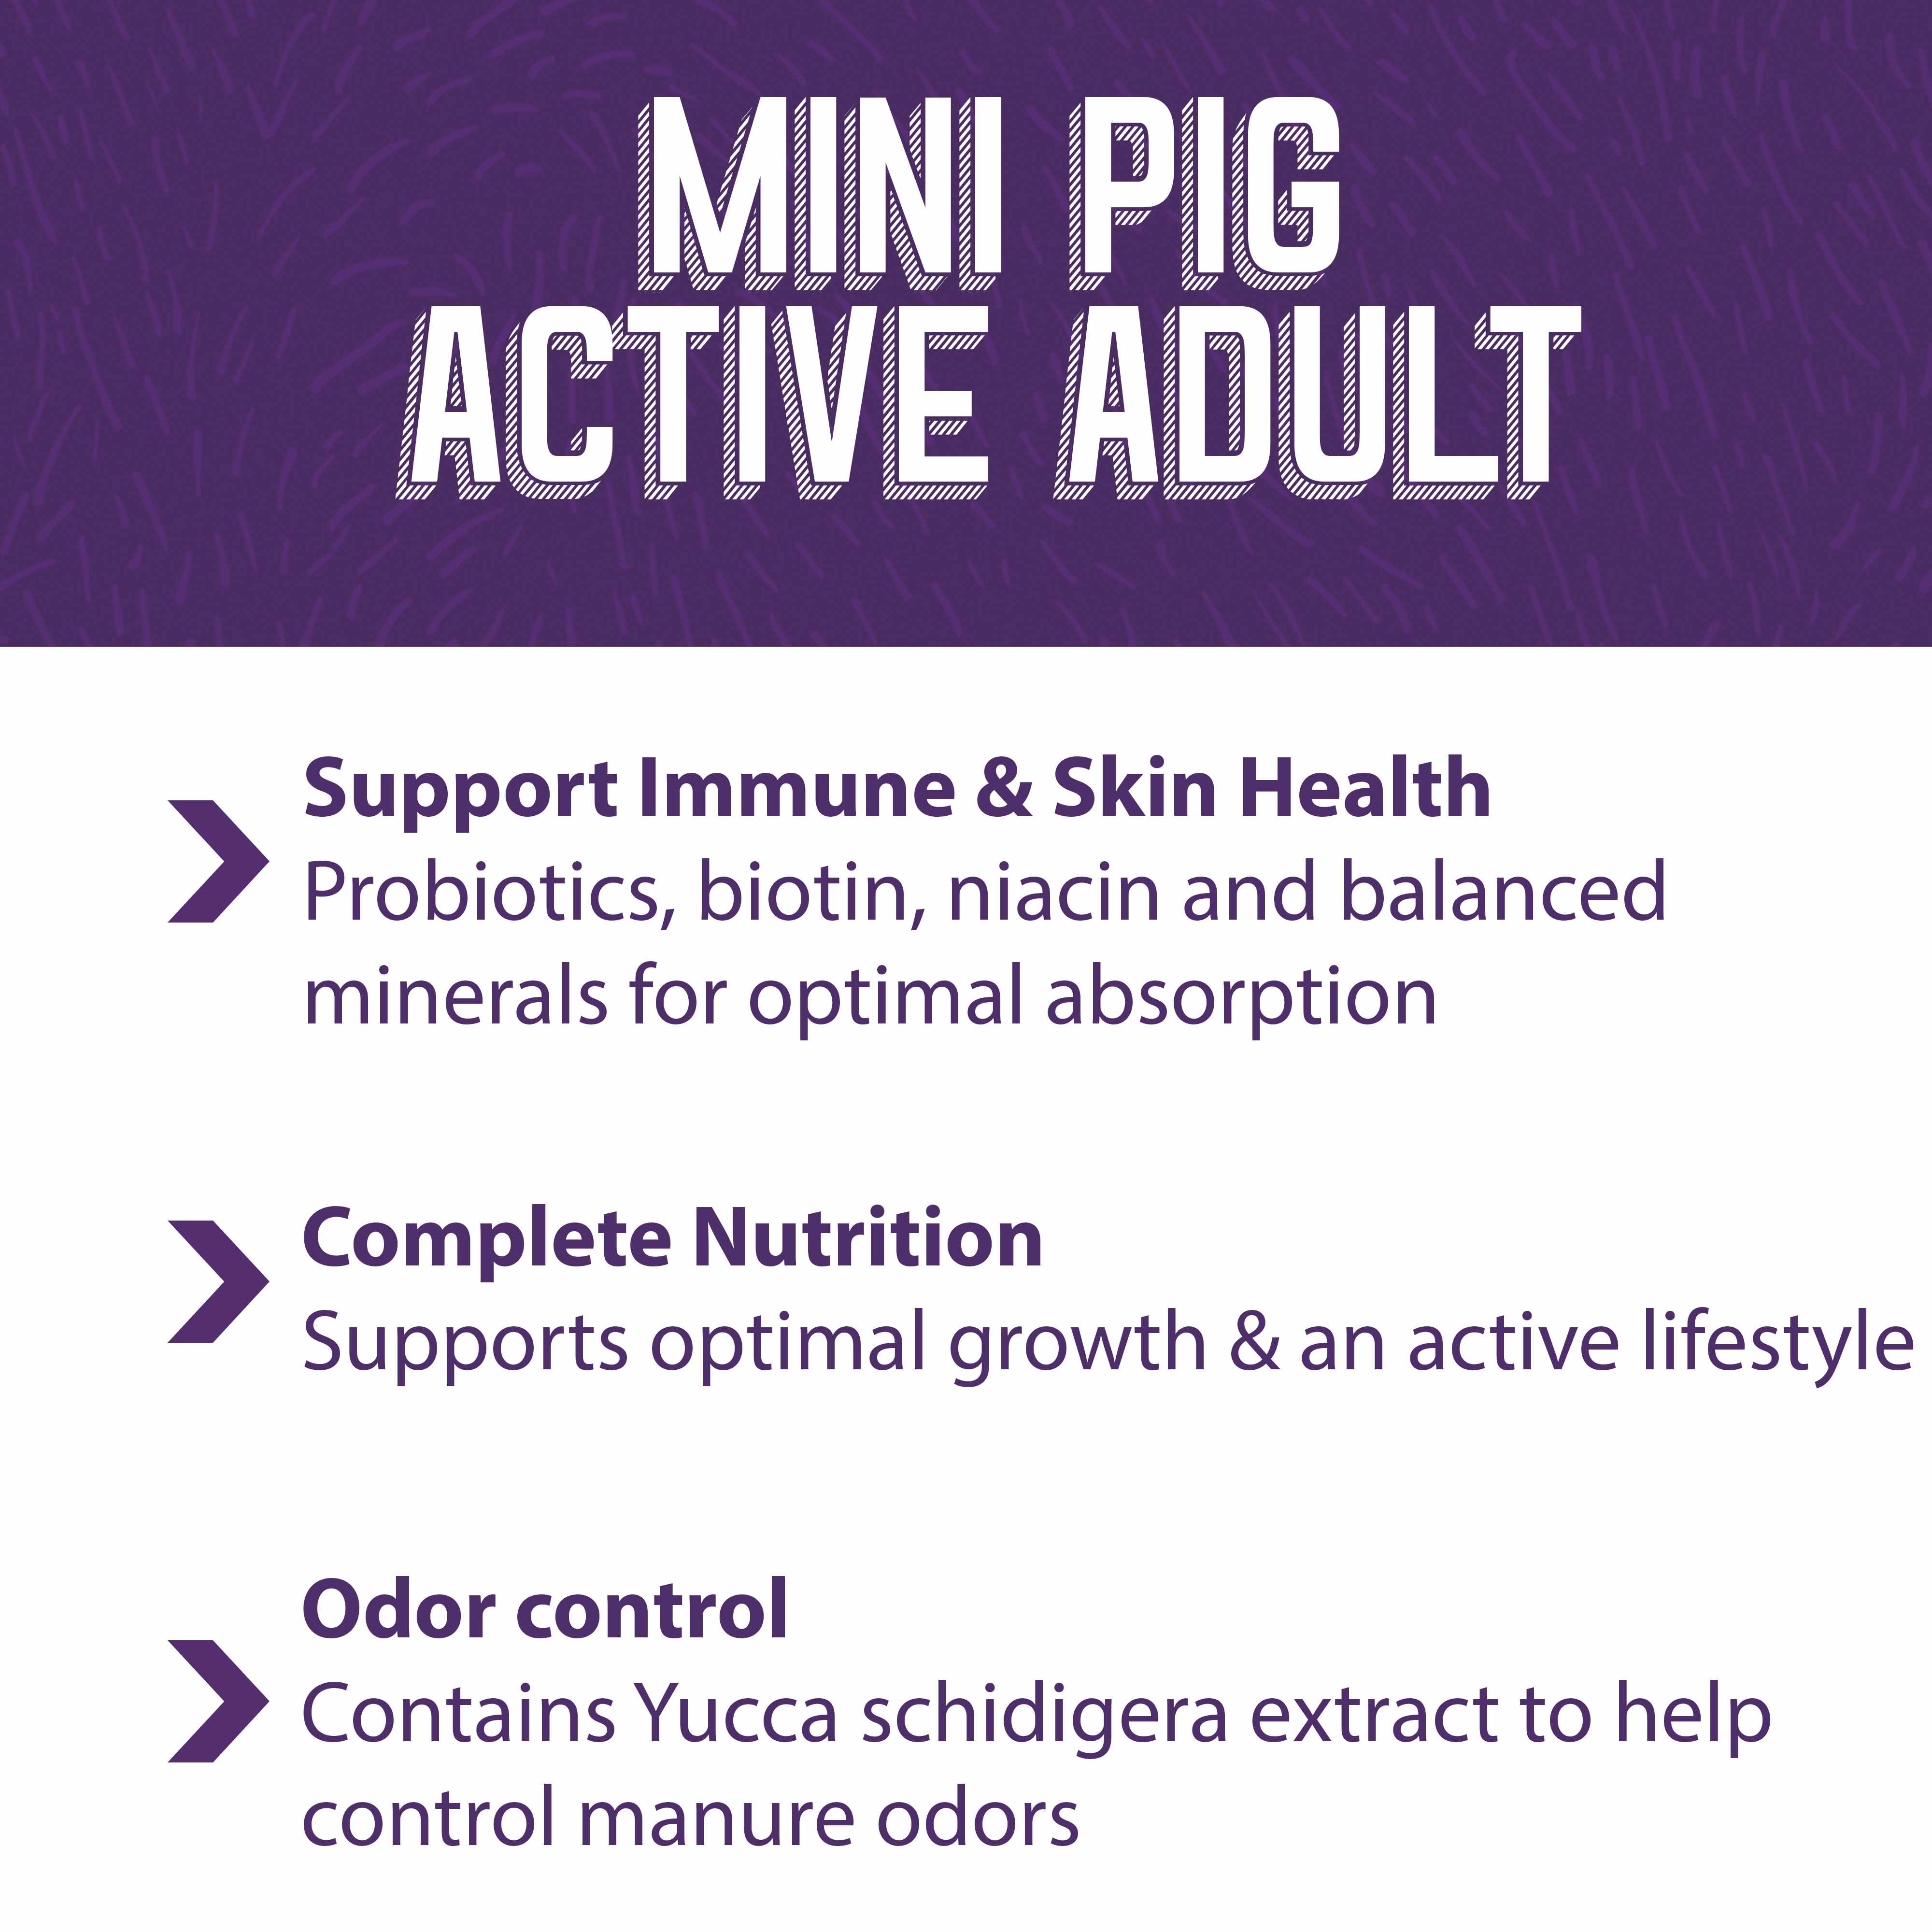 Mini Pig Active Adult supports immune & skin health